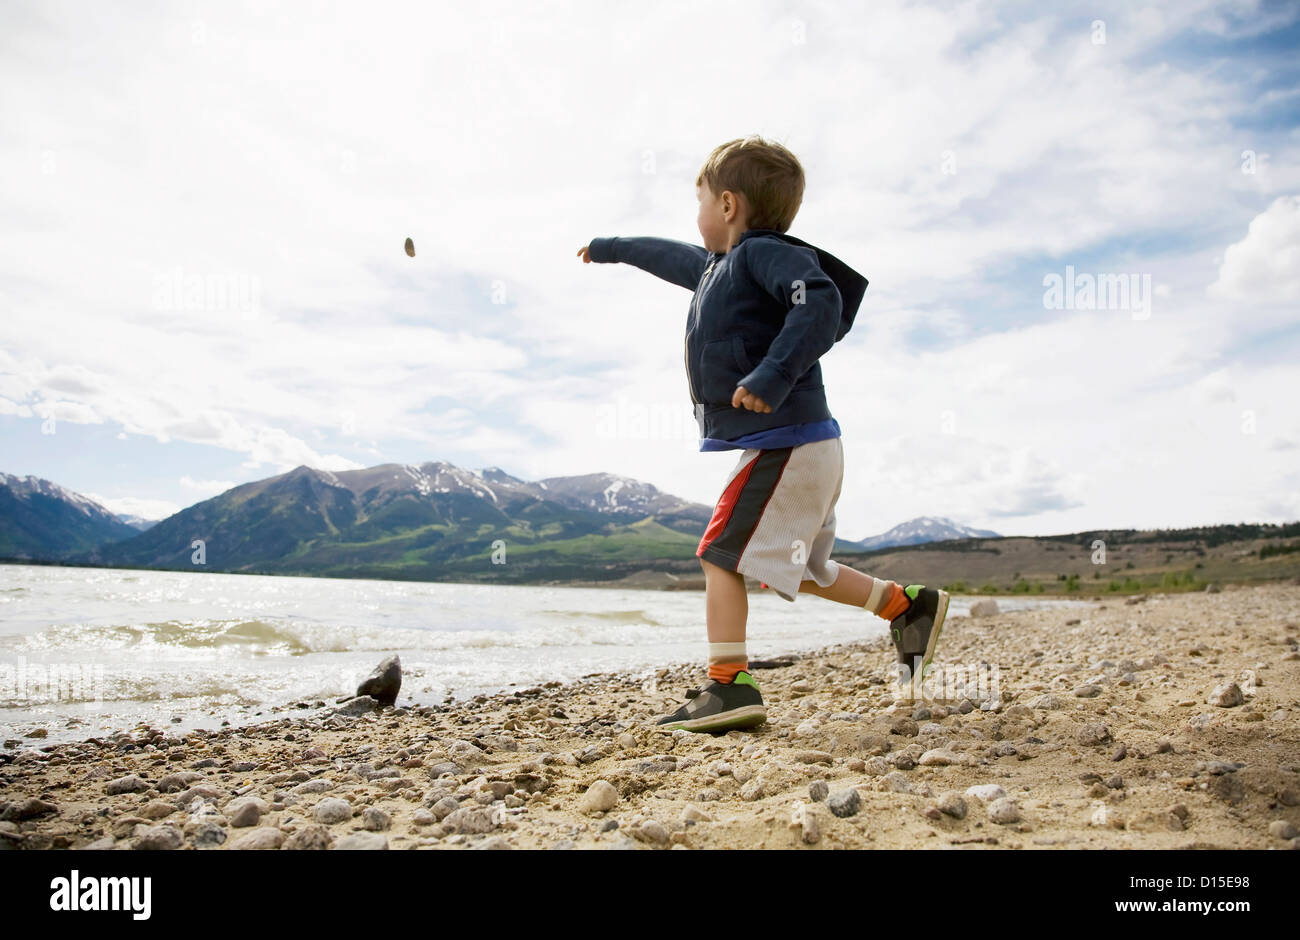 USA, Colorado, Boy (2-3) throwing rock in lake Stock Photo